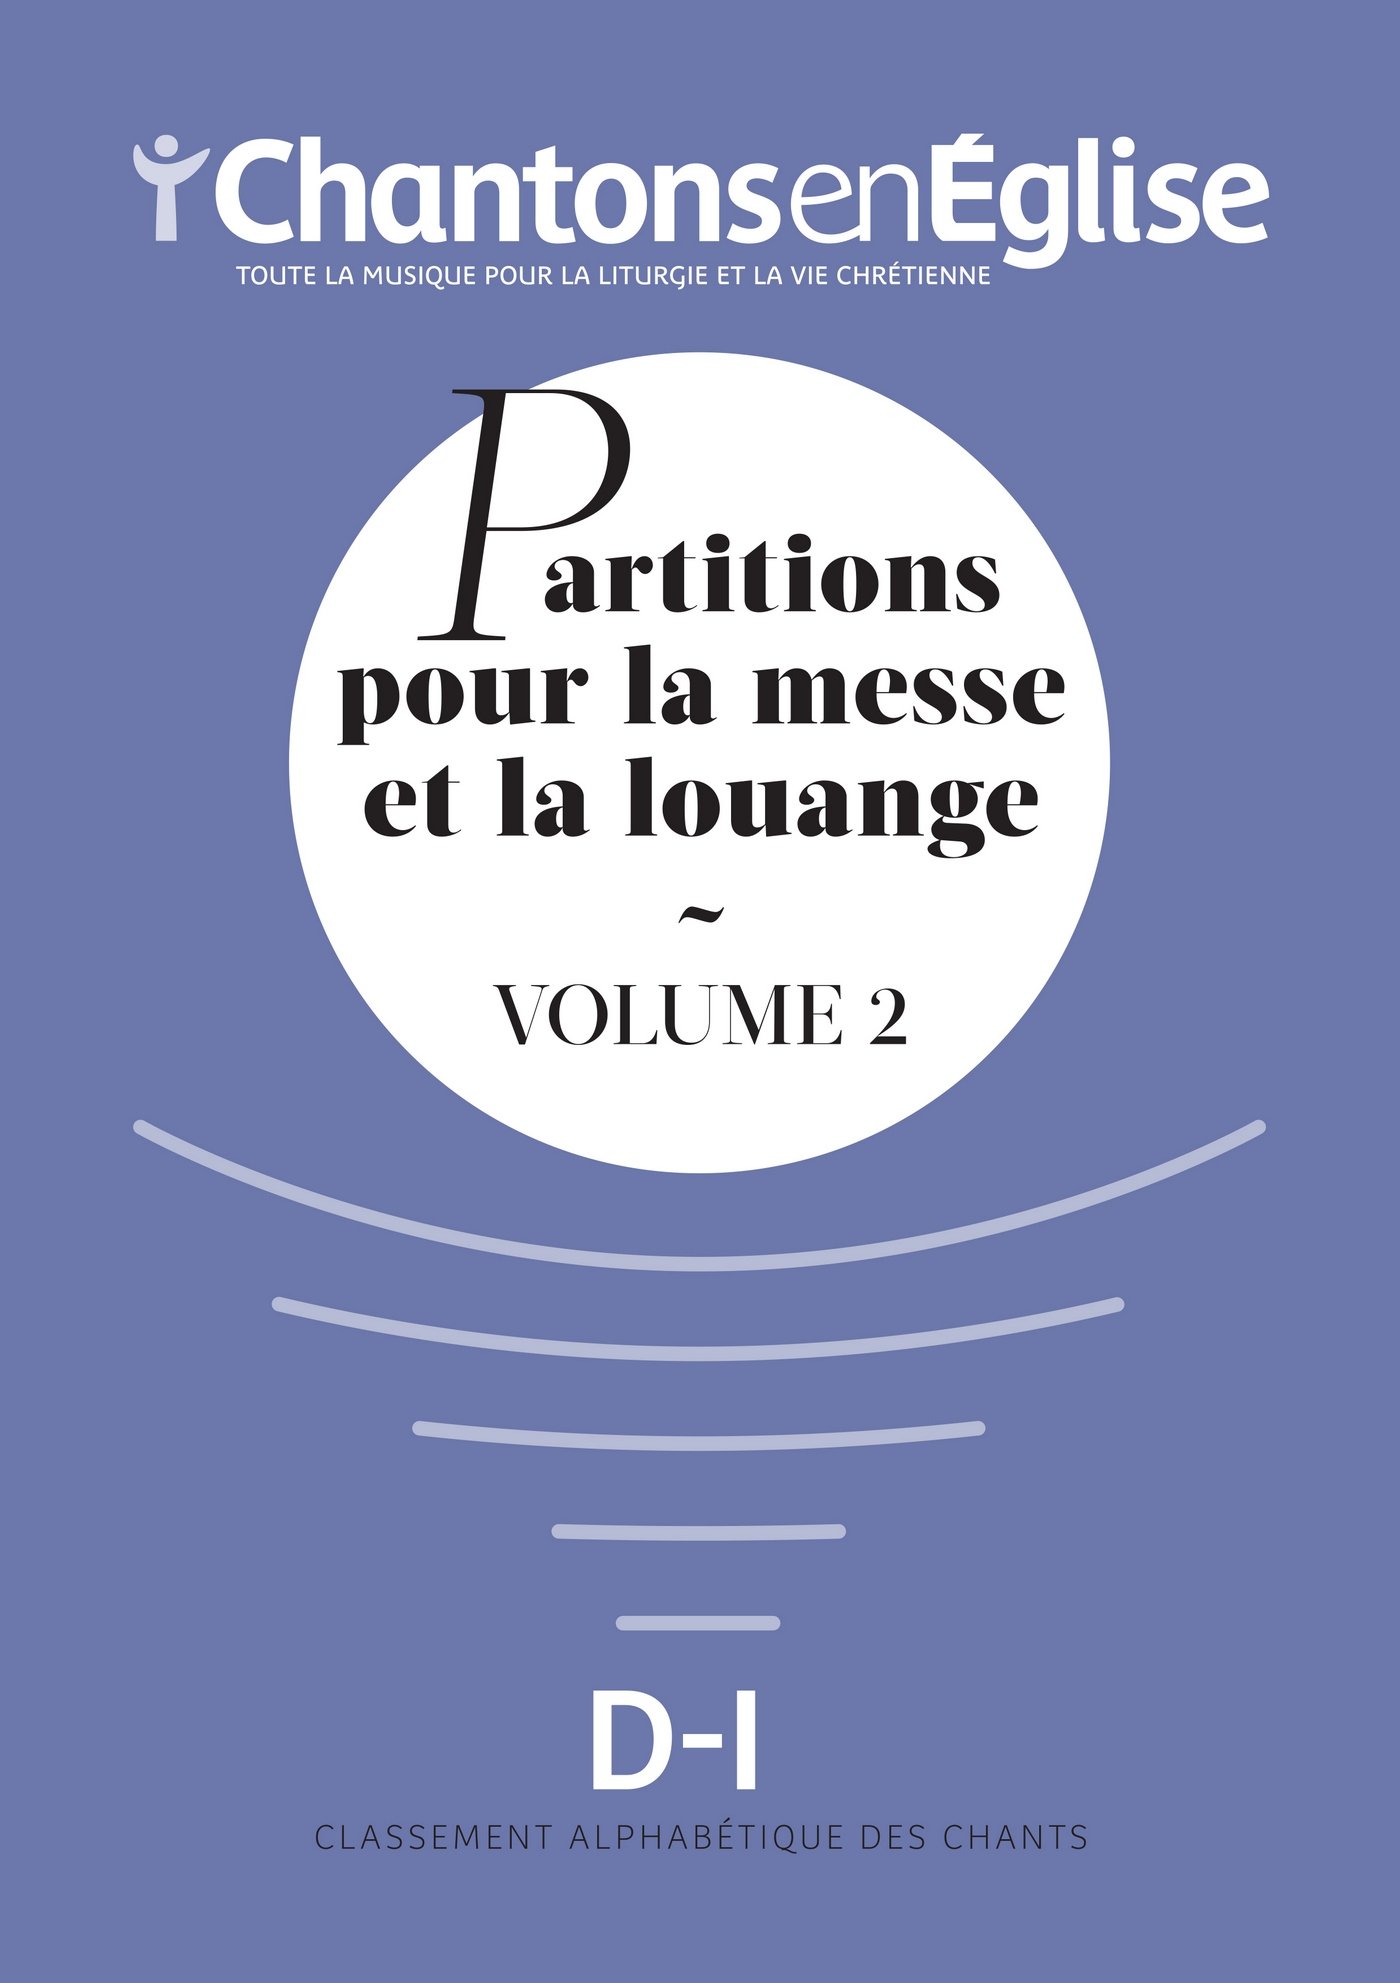 Libri Various - Chantons En Eglise : Partitions Pour La Messe Et La Louange Vol. 2 NUOVO SIGILLATO, EDIZIONE DEL 25/05/2017 SUBITO DISPONIBILE